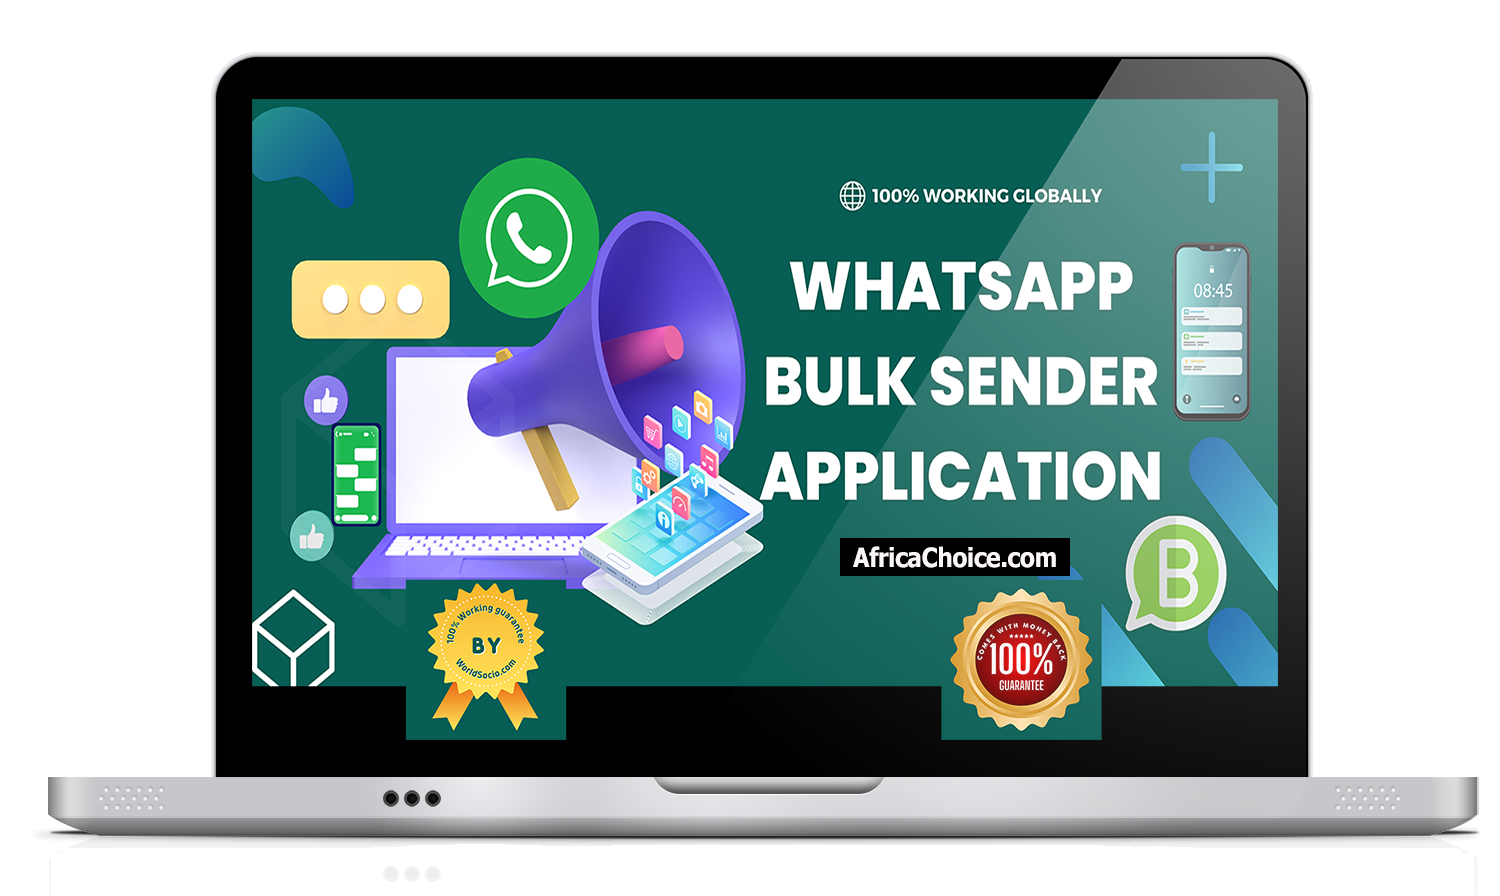 Whatsapp-Bulk-Sender-Application,-AfricaChoice.png